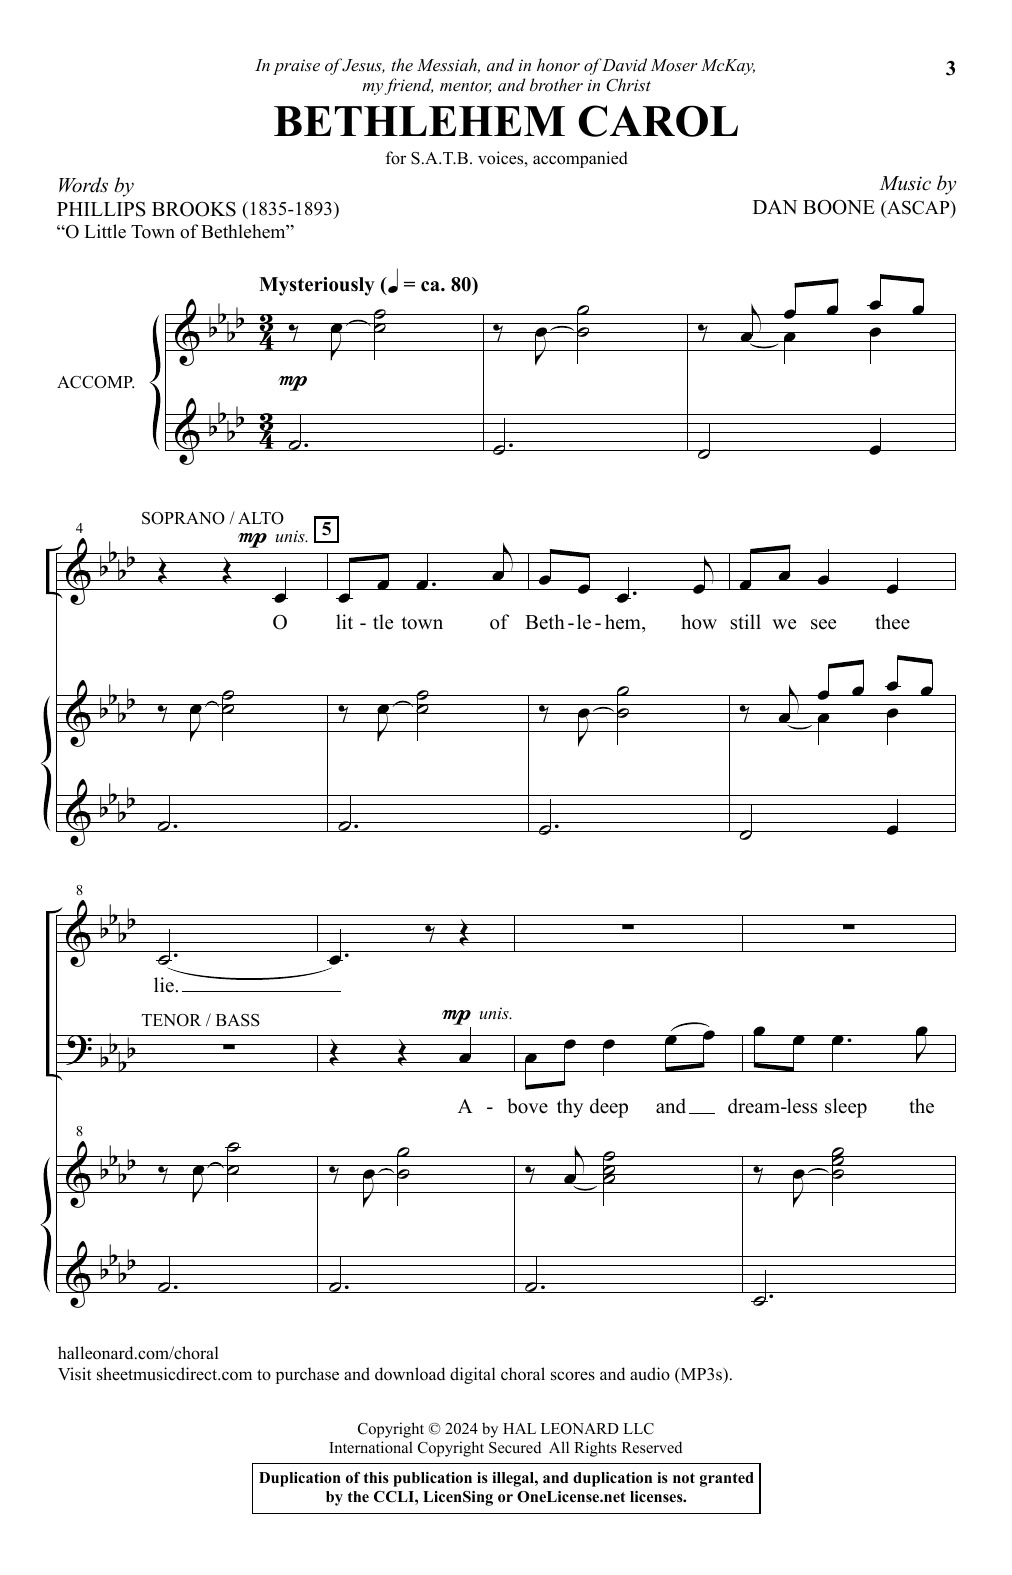 Dan Boone Bethlehem Carol Sheet Music Notes & Chords for SATB Choir - Download or Print PDF